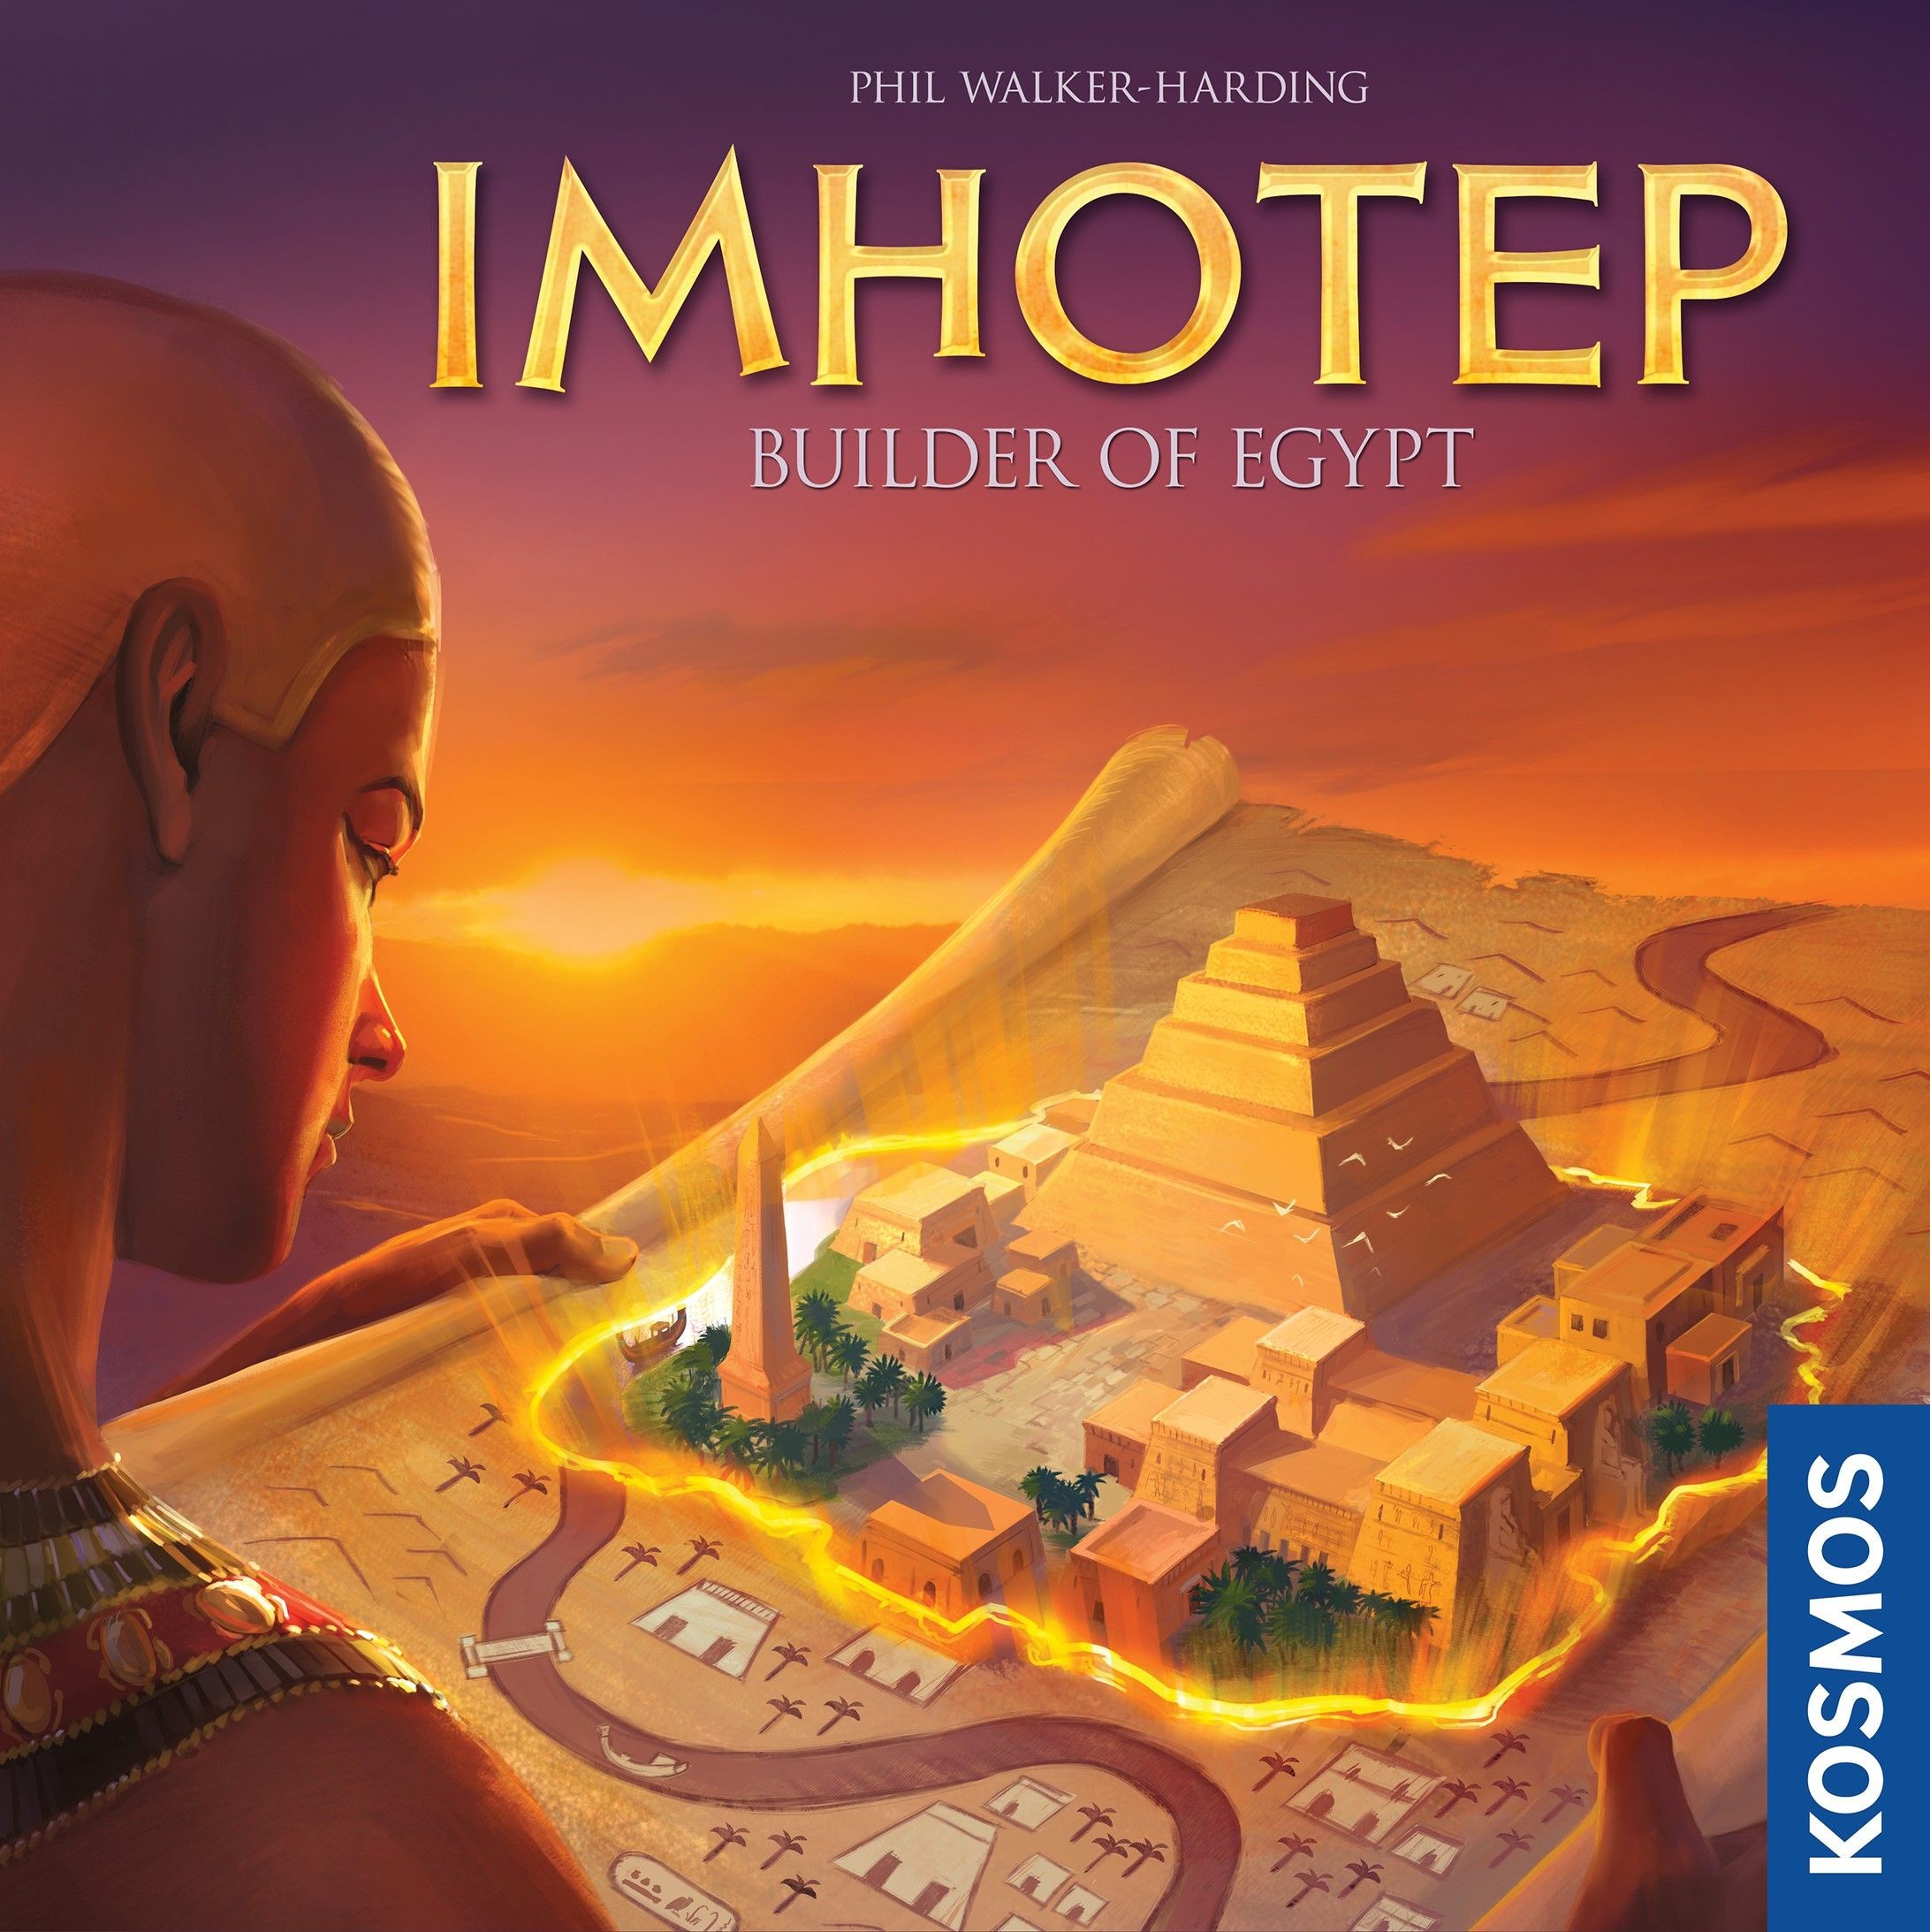 Imhotep (English Edition)